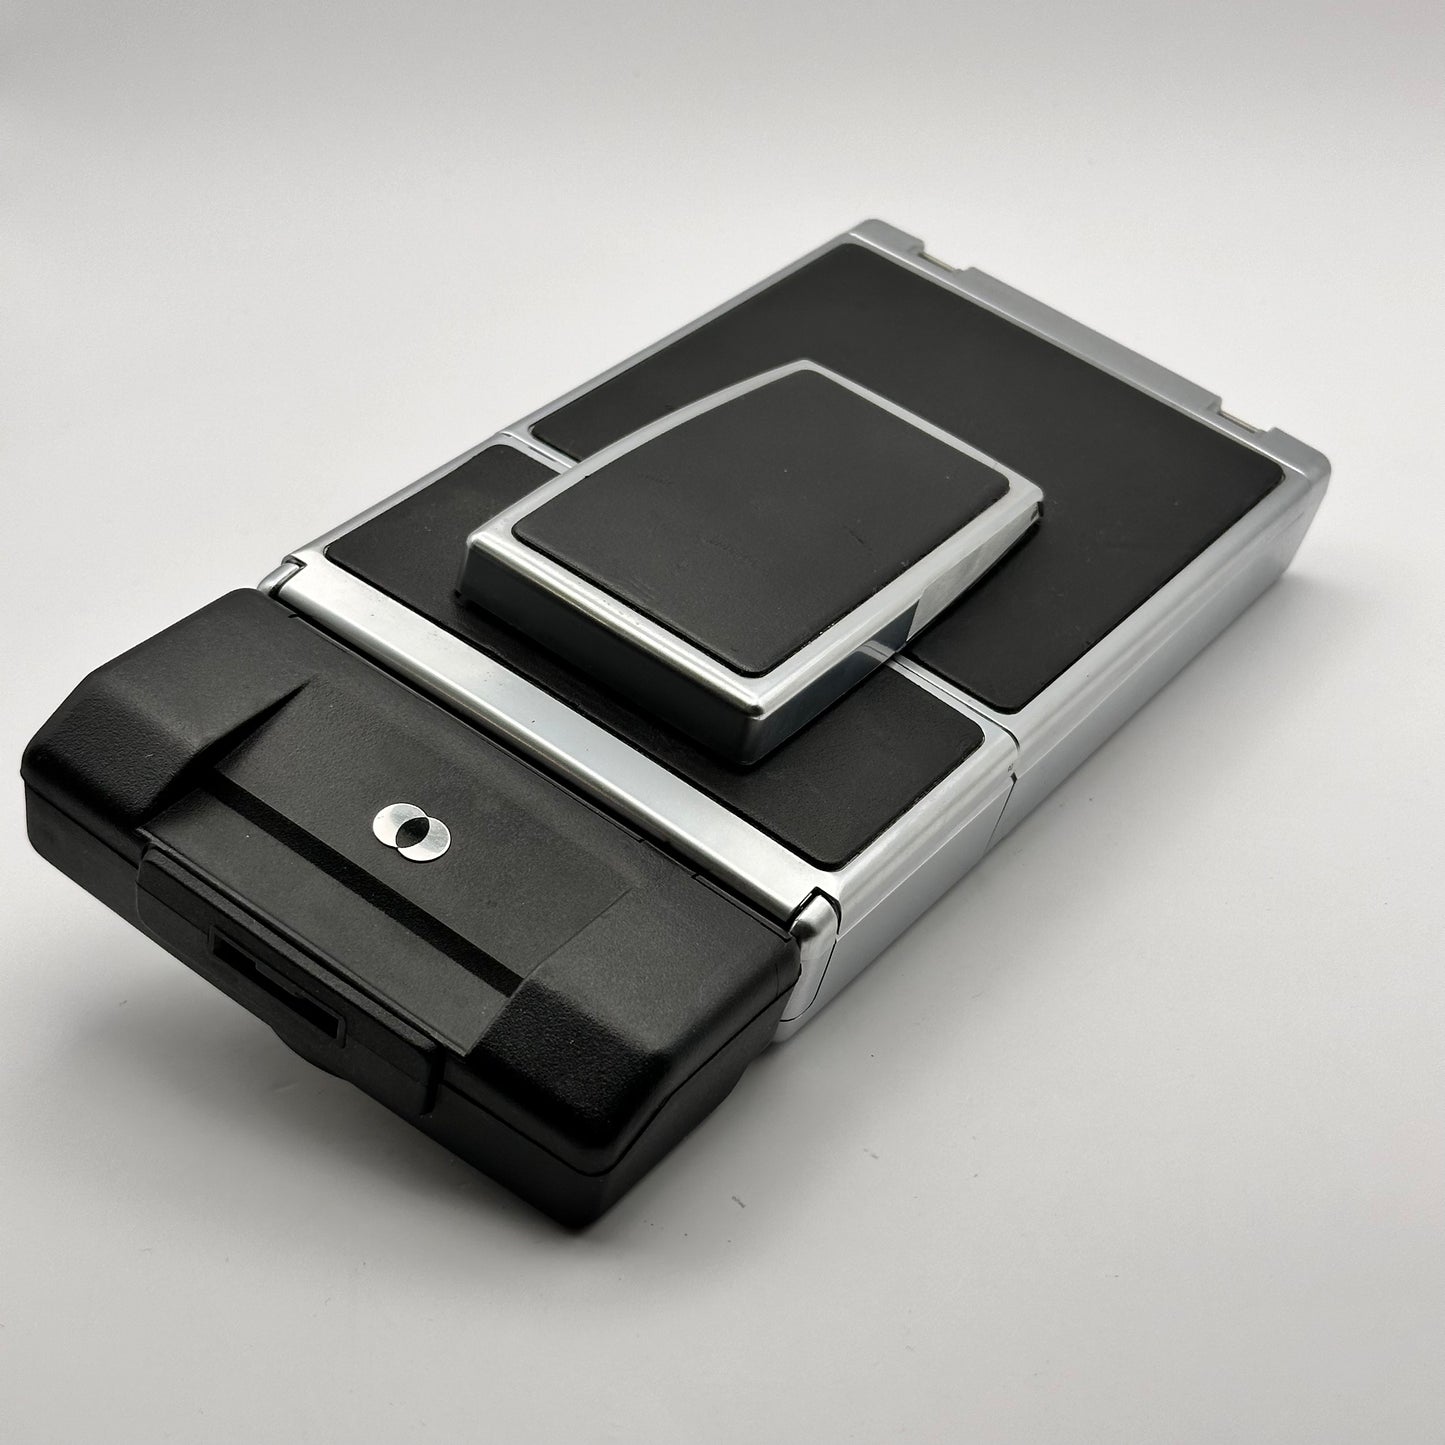 Polaroid SX-70 Land Camera Sonar Autofocus